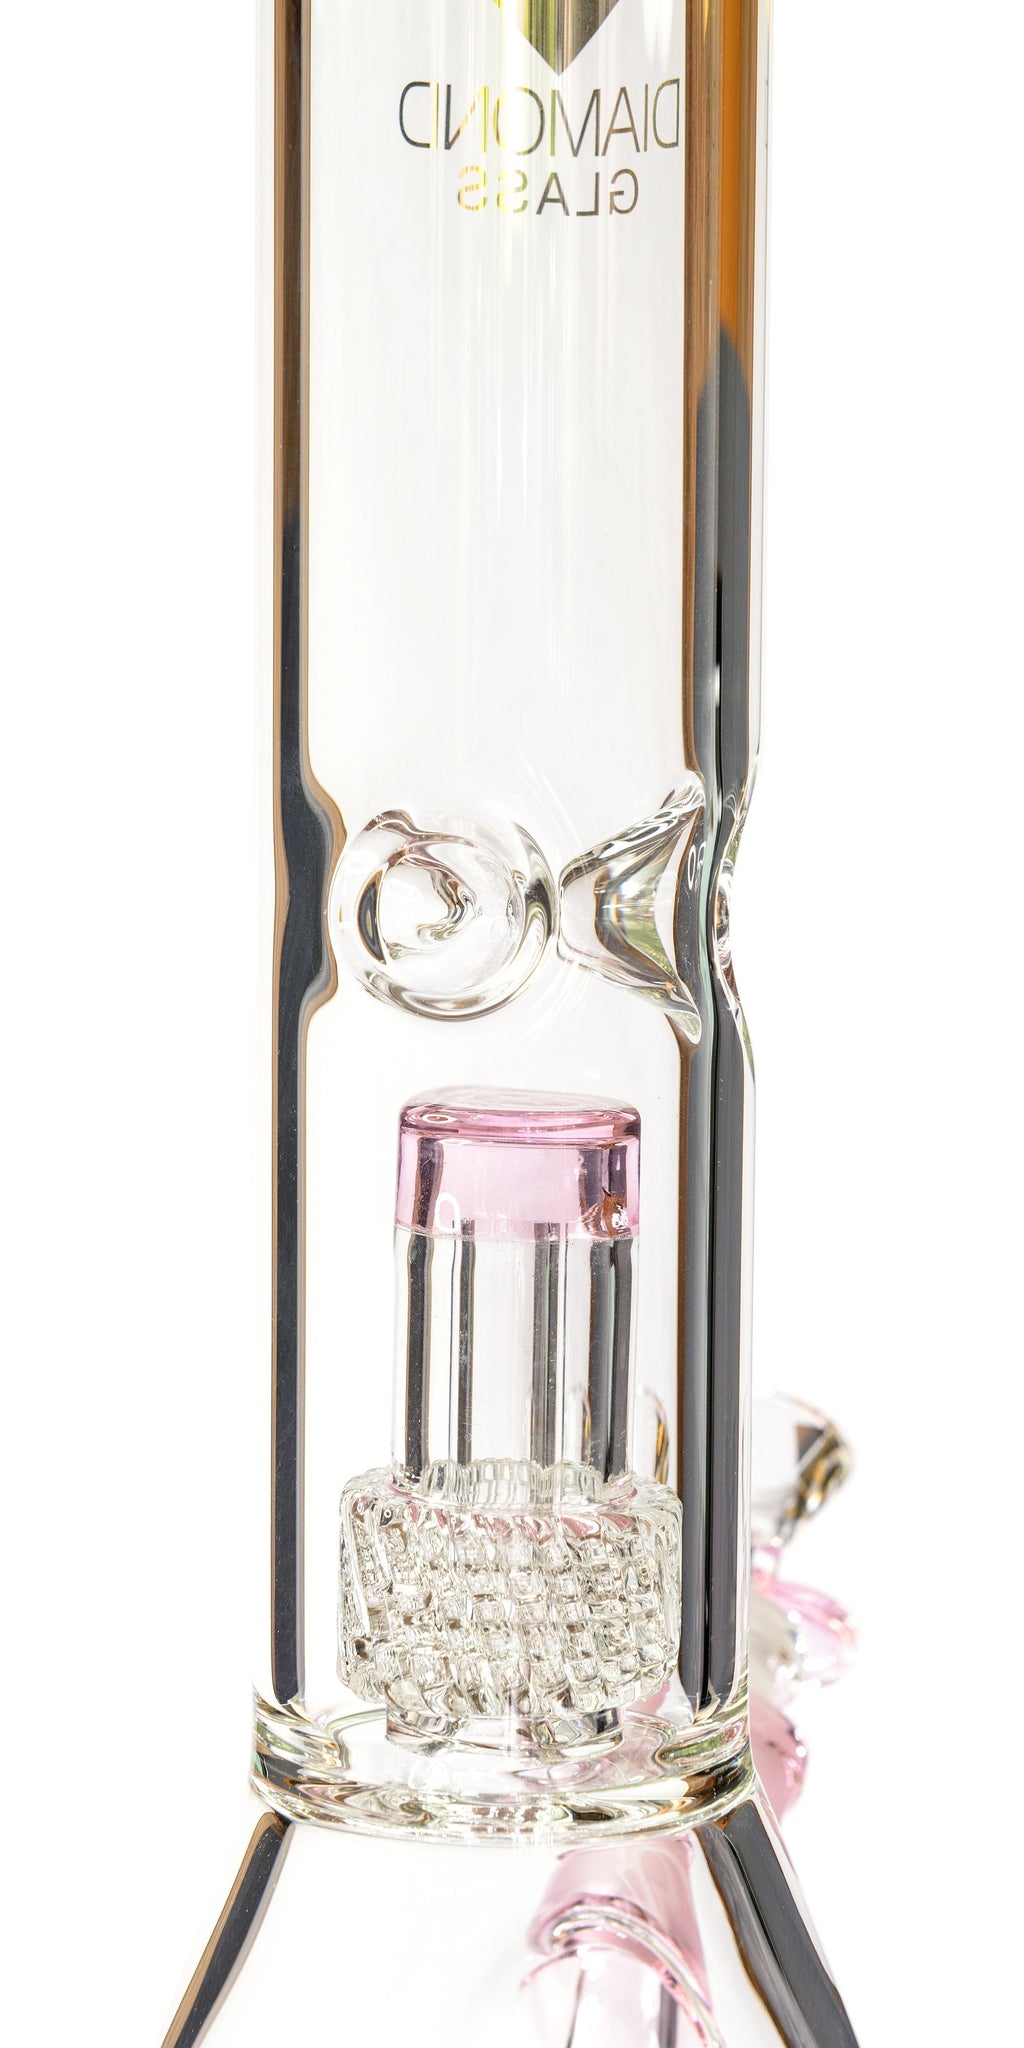 CaliConnected 14” Floral Diamond Beaker Bong